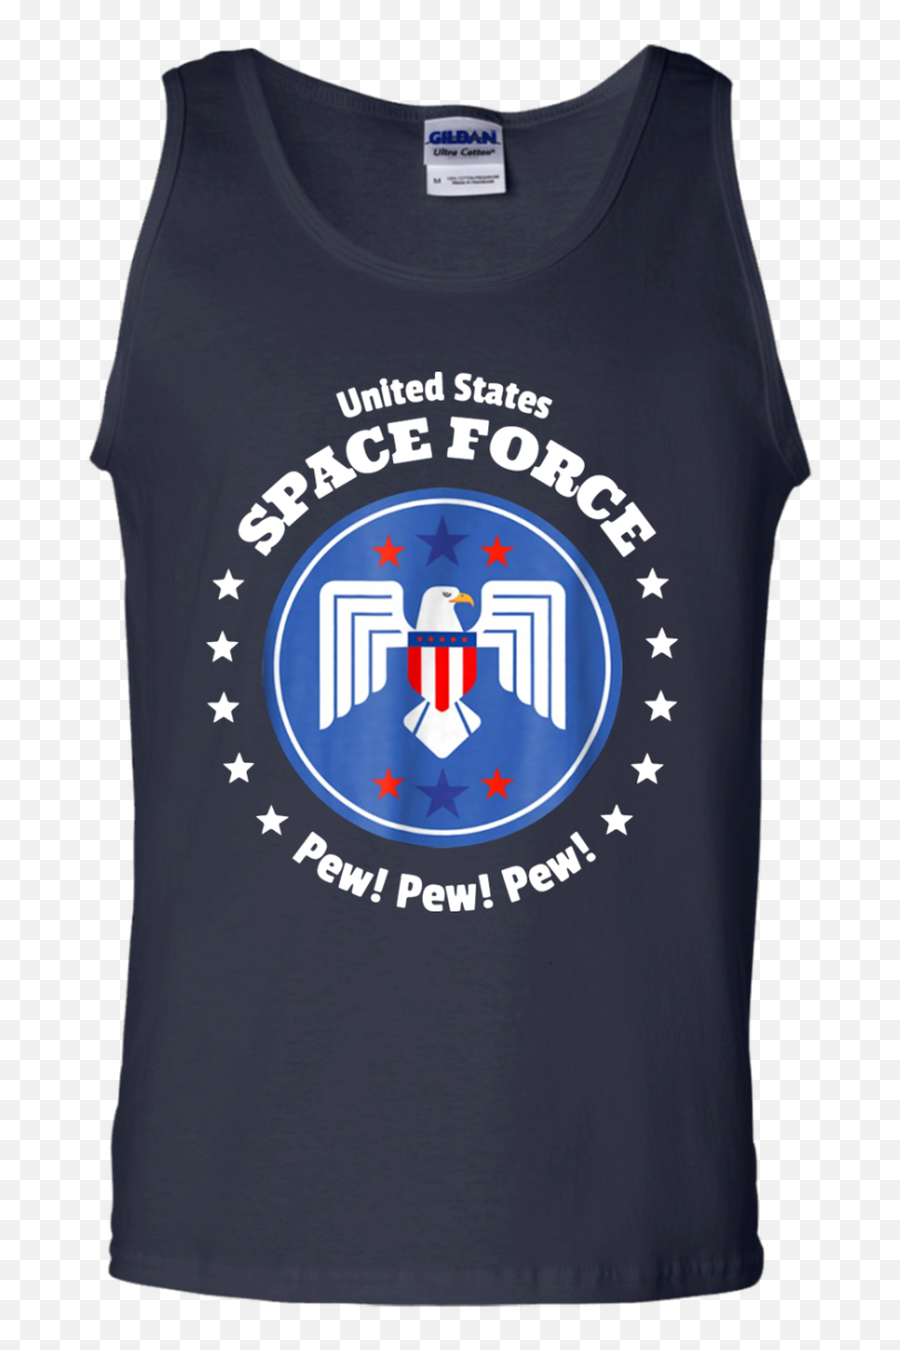 Funny Logo Shirt Cotton Tank Top - Sleeveless Emoji,United States Space Force Logo